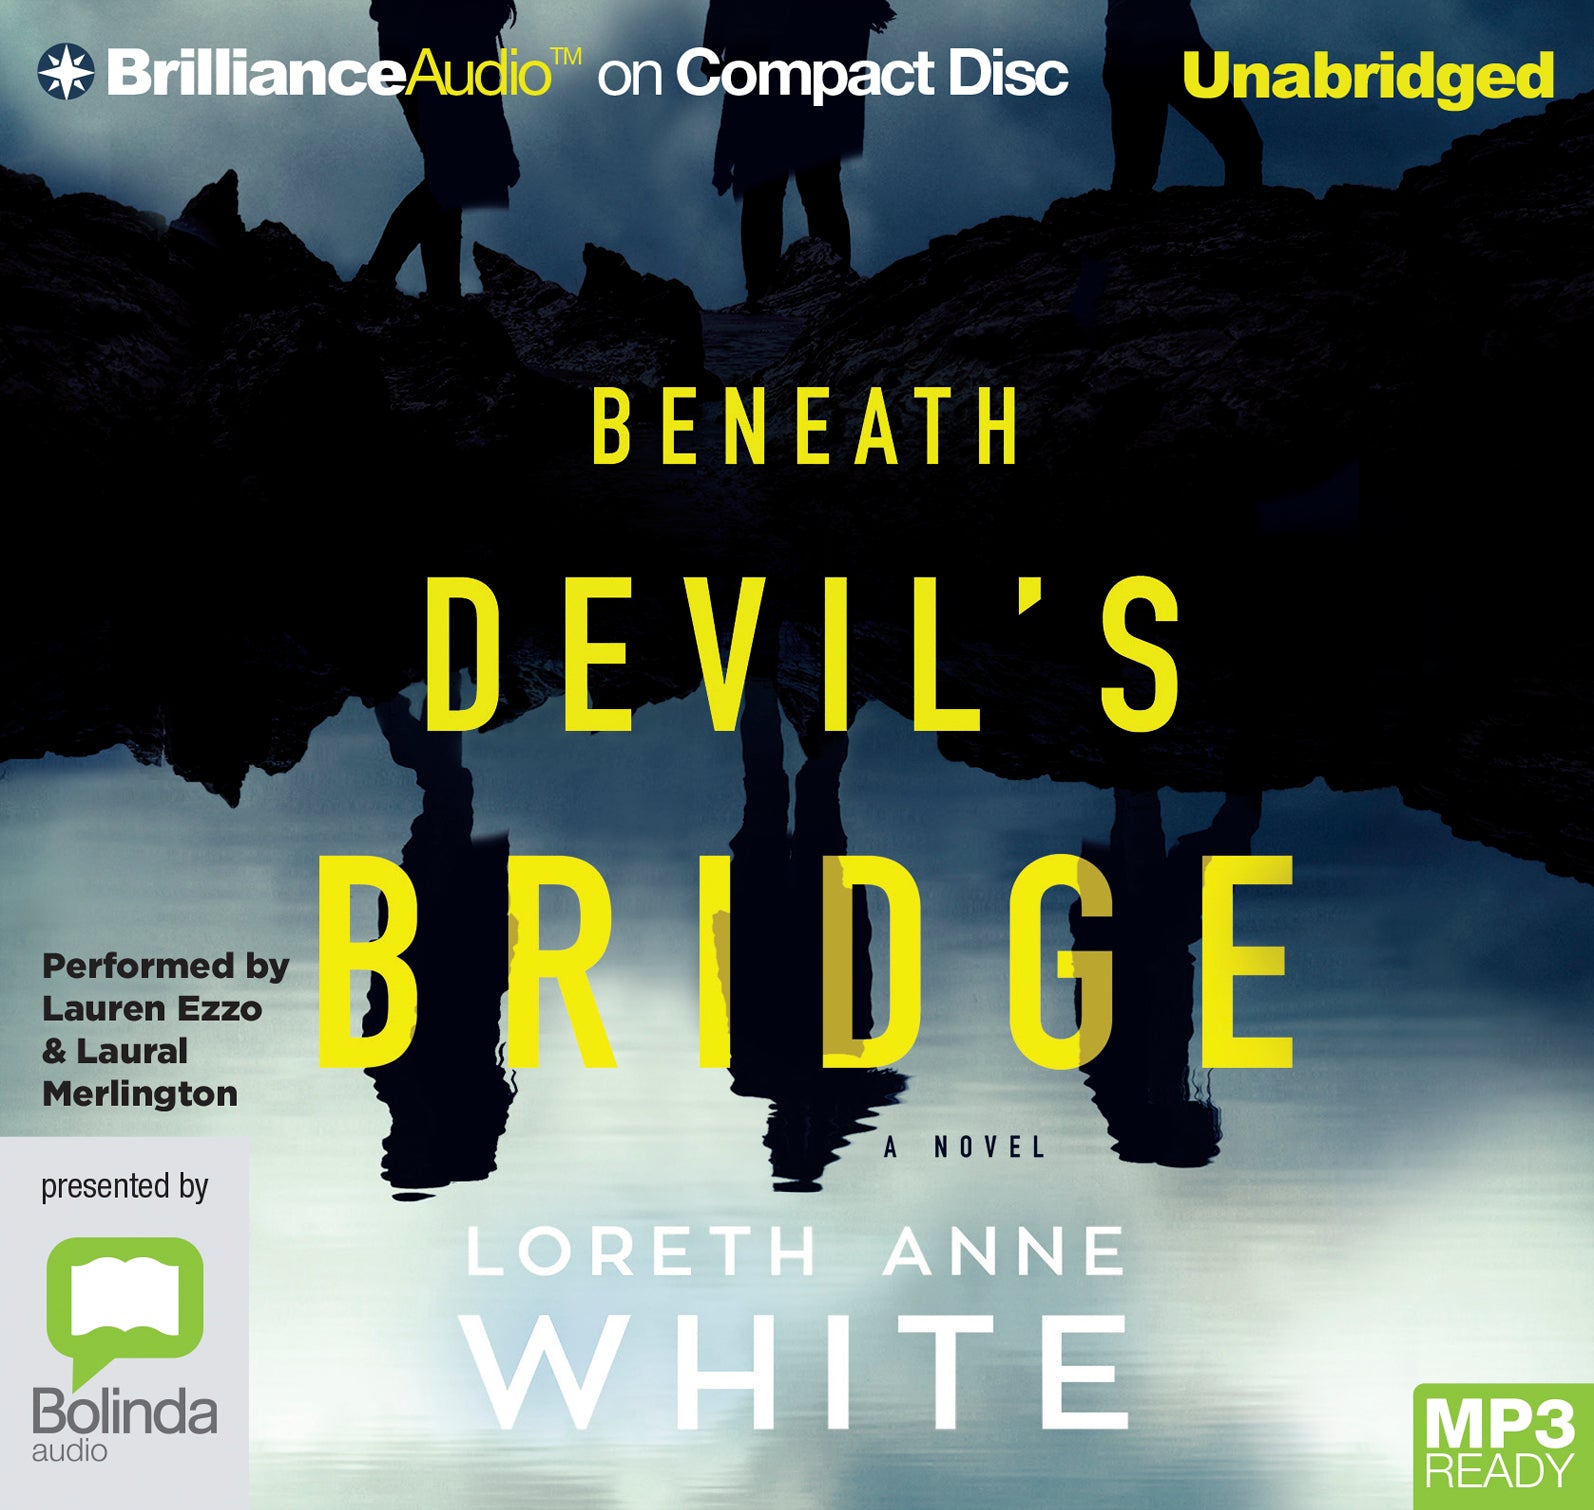 Beneath Devil's Bridge  - Unbridged Audio Book on MP3